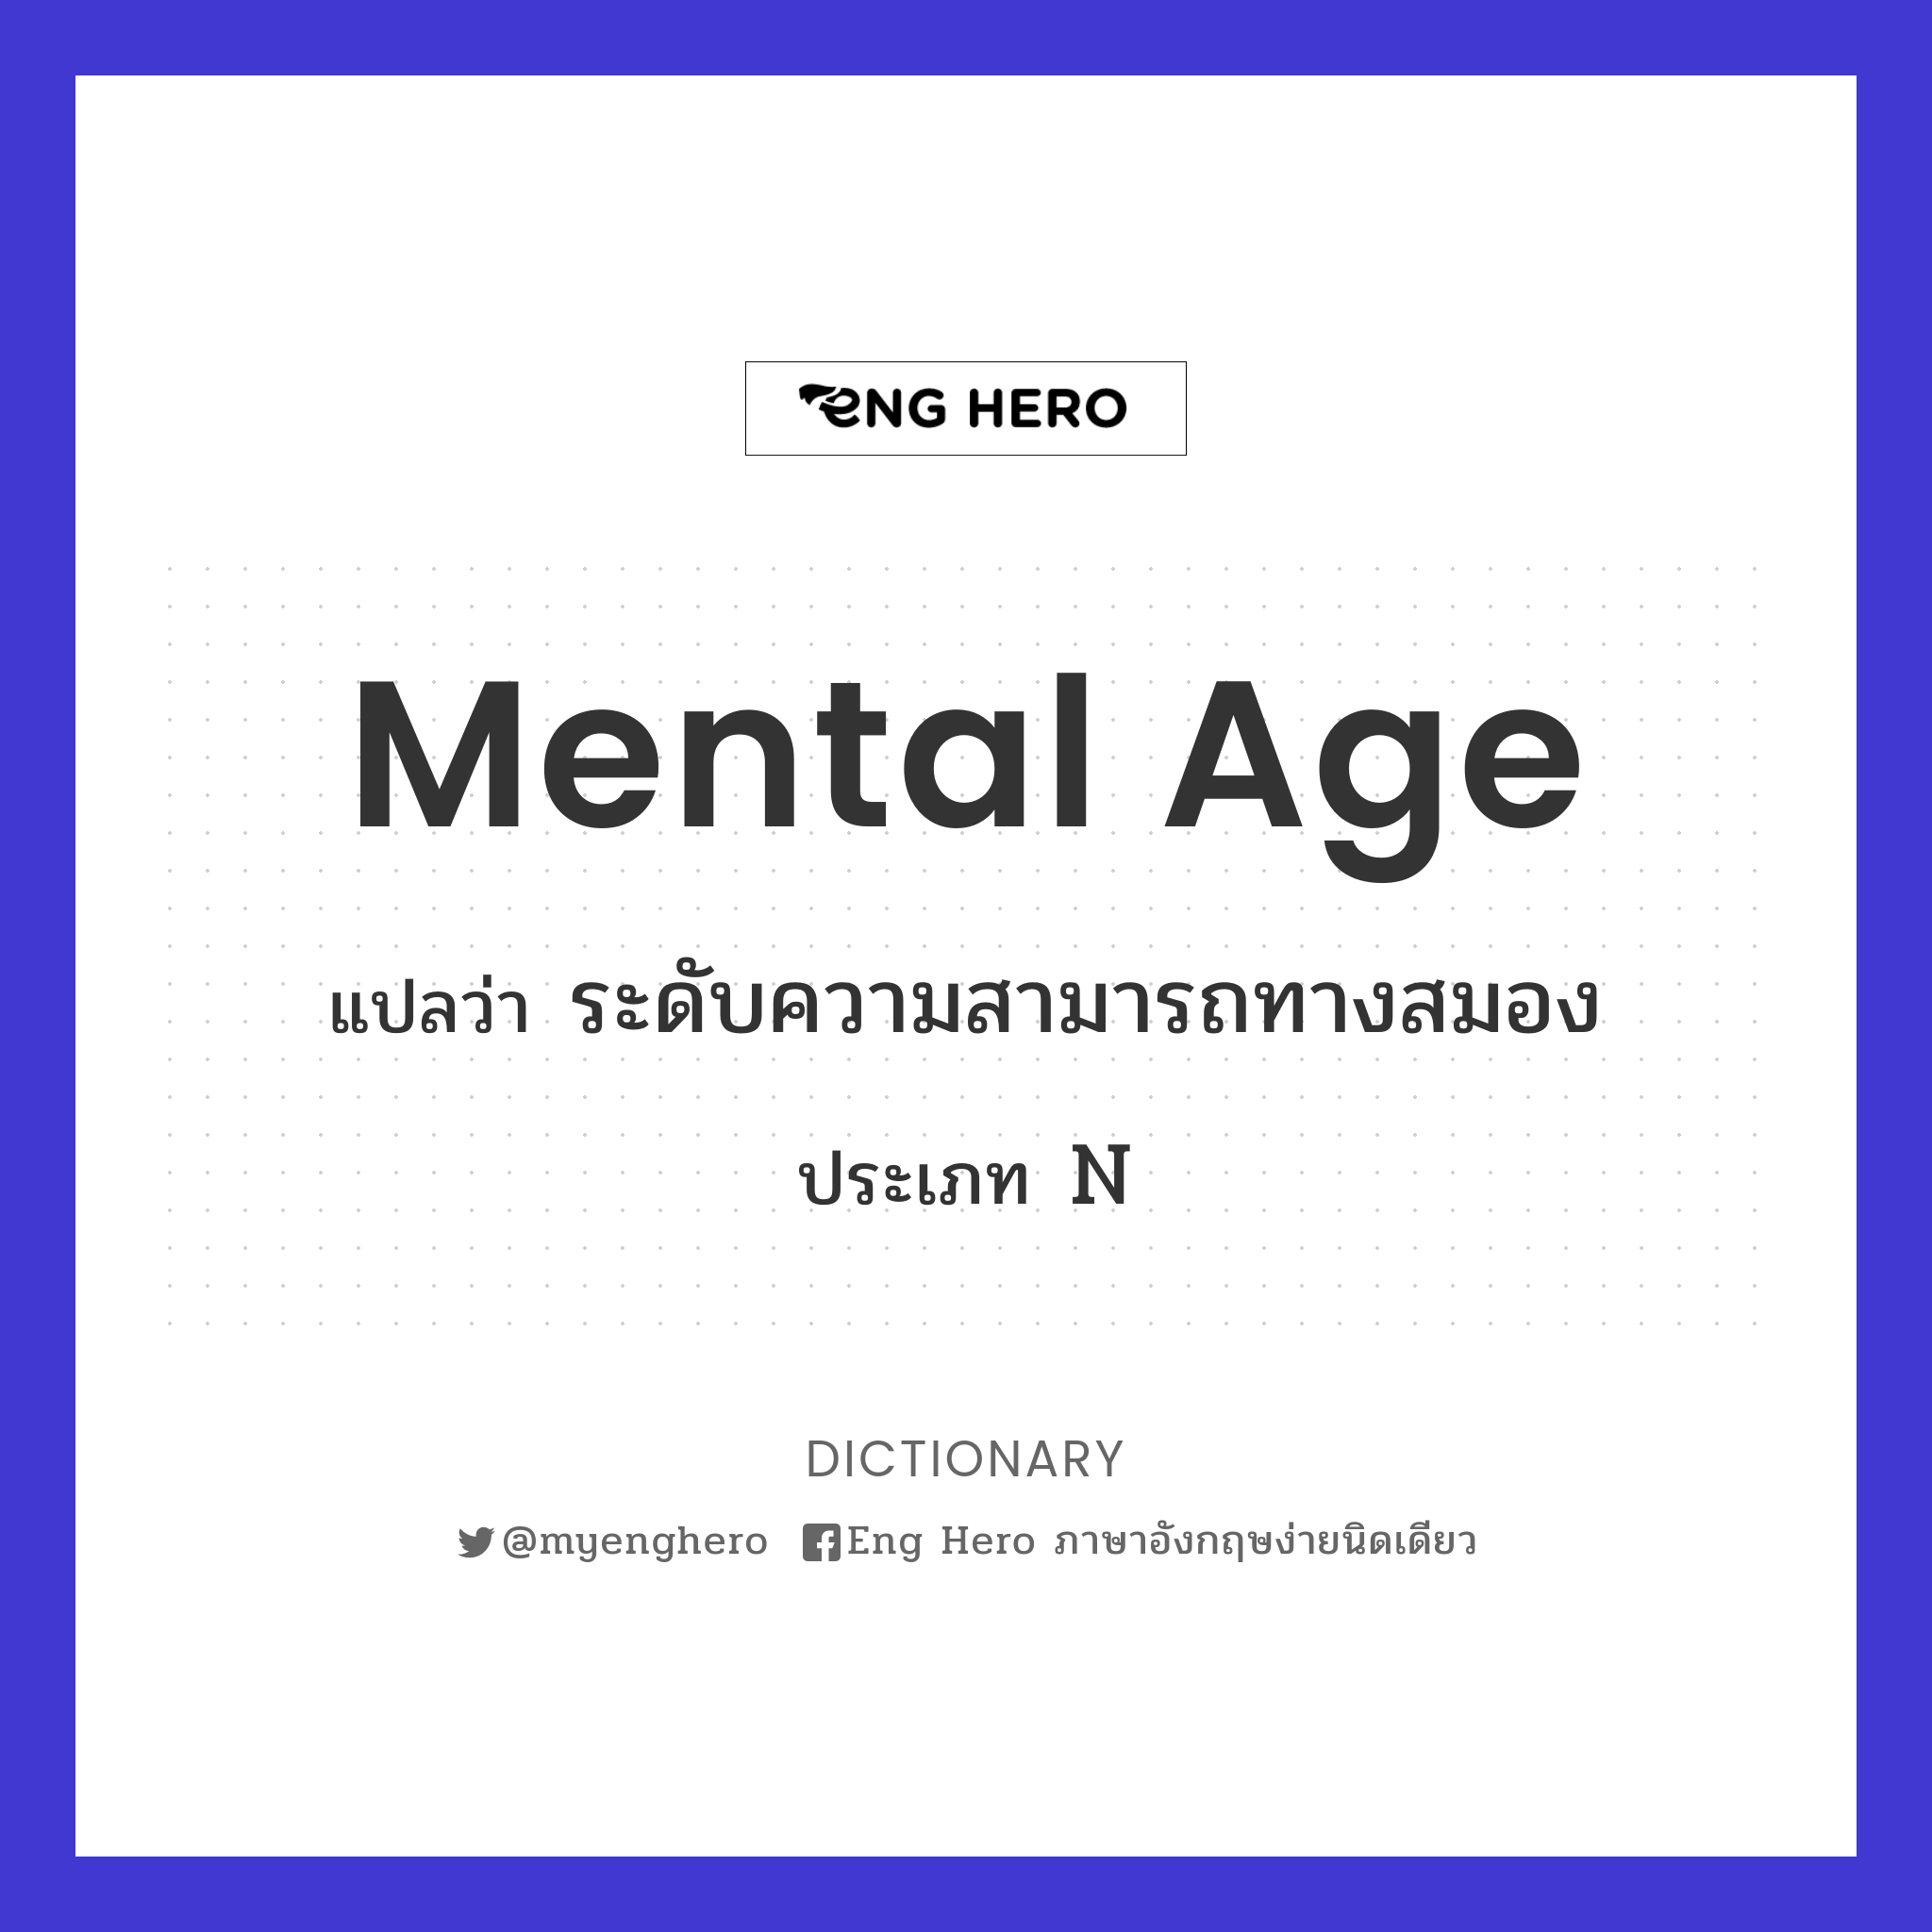 mental age